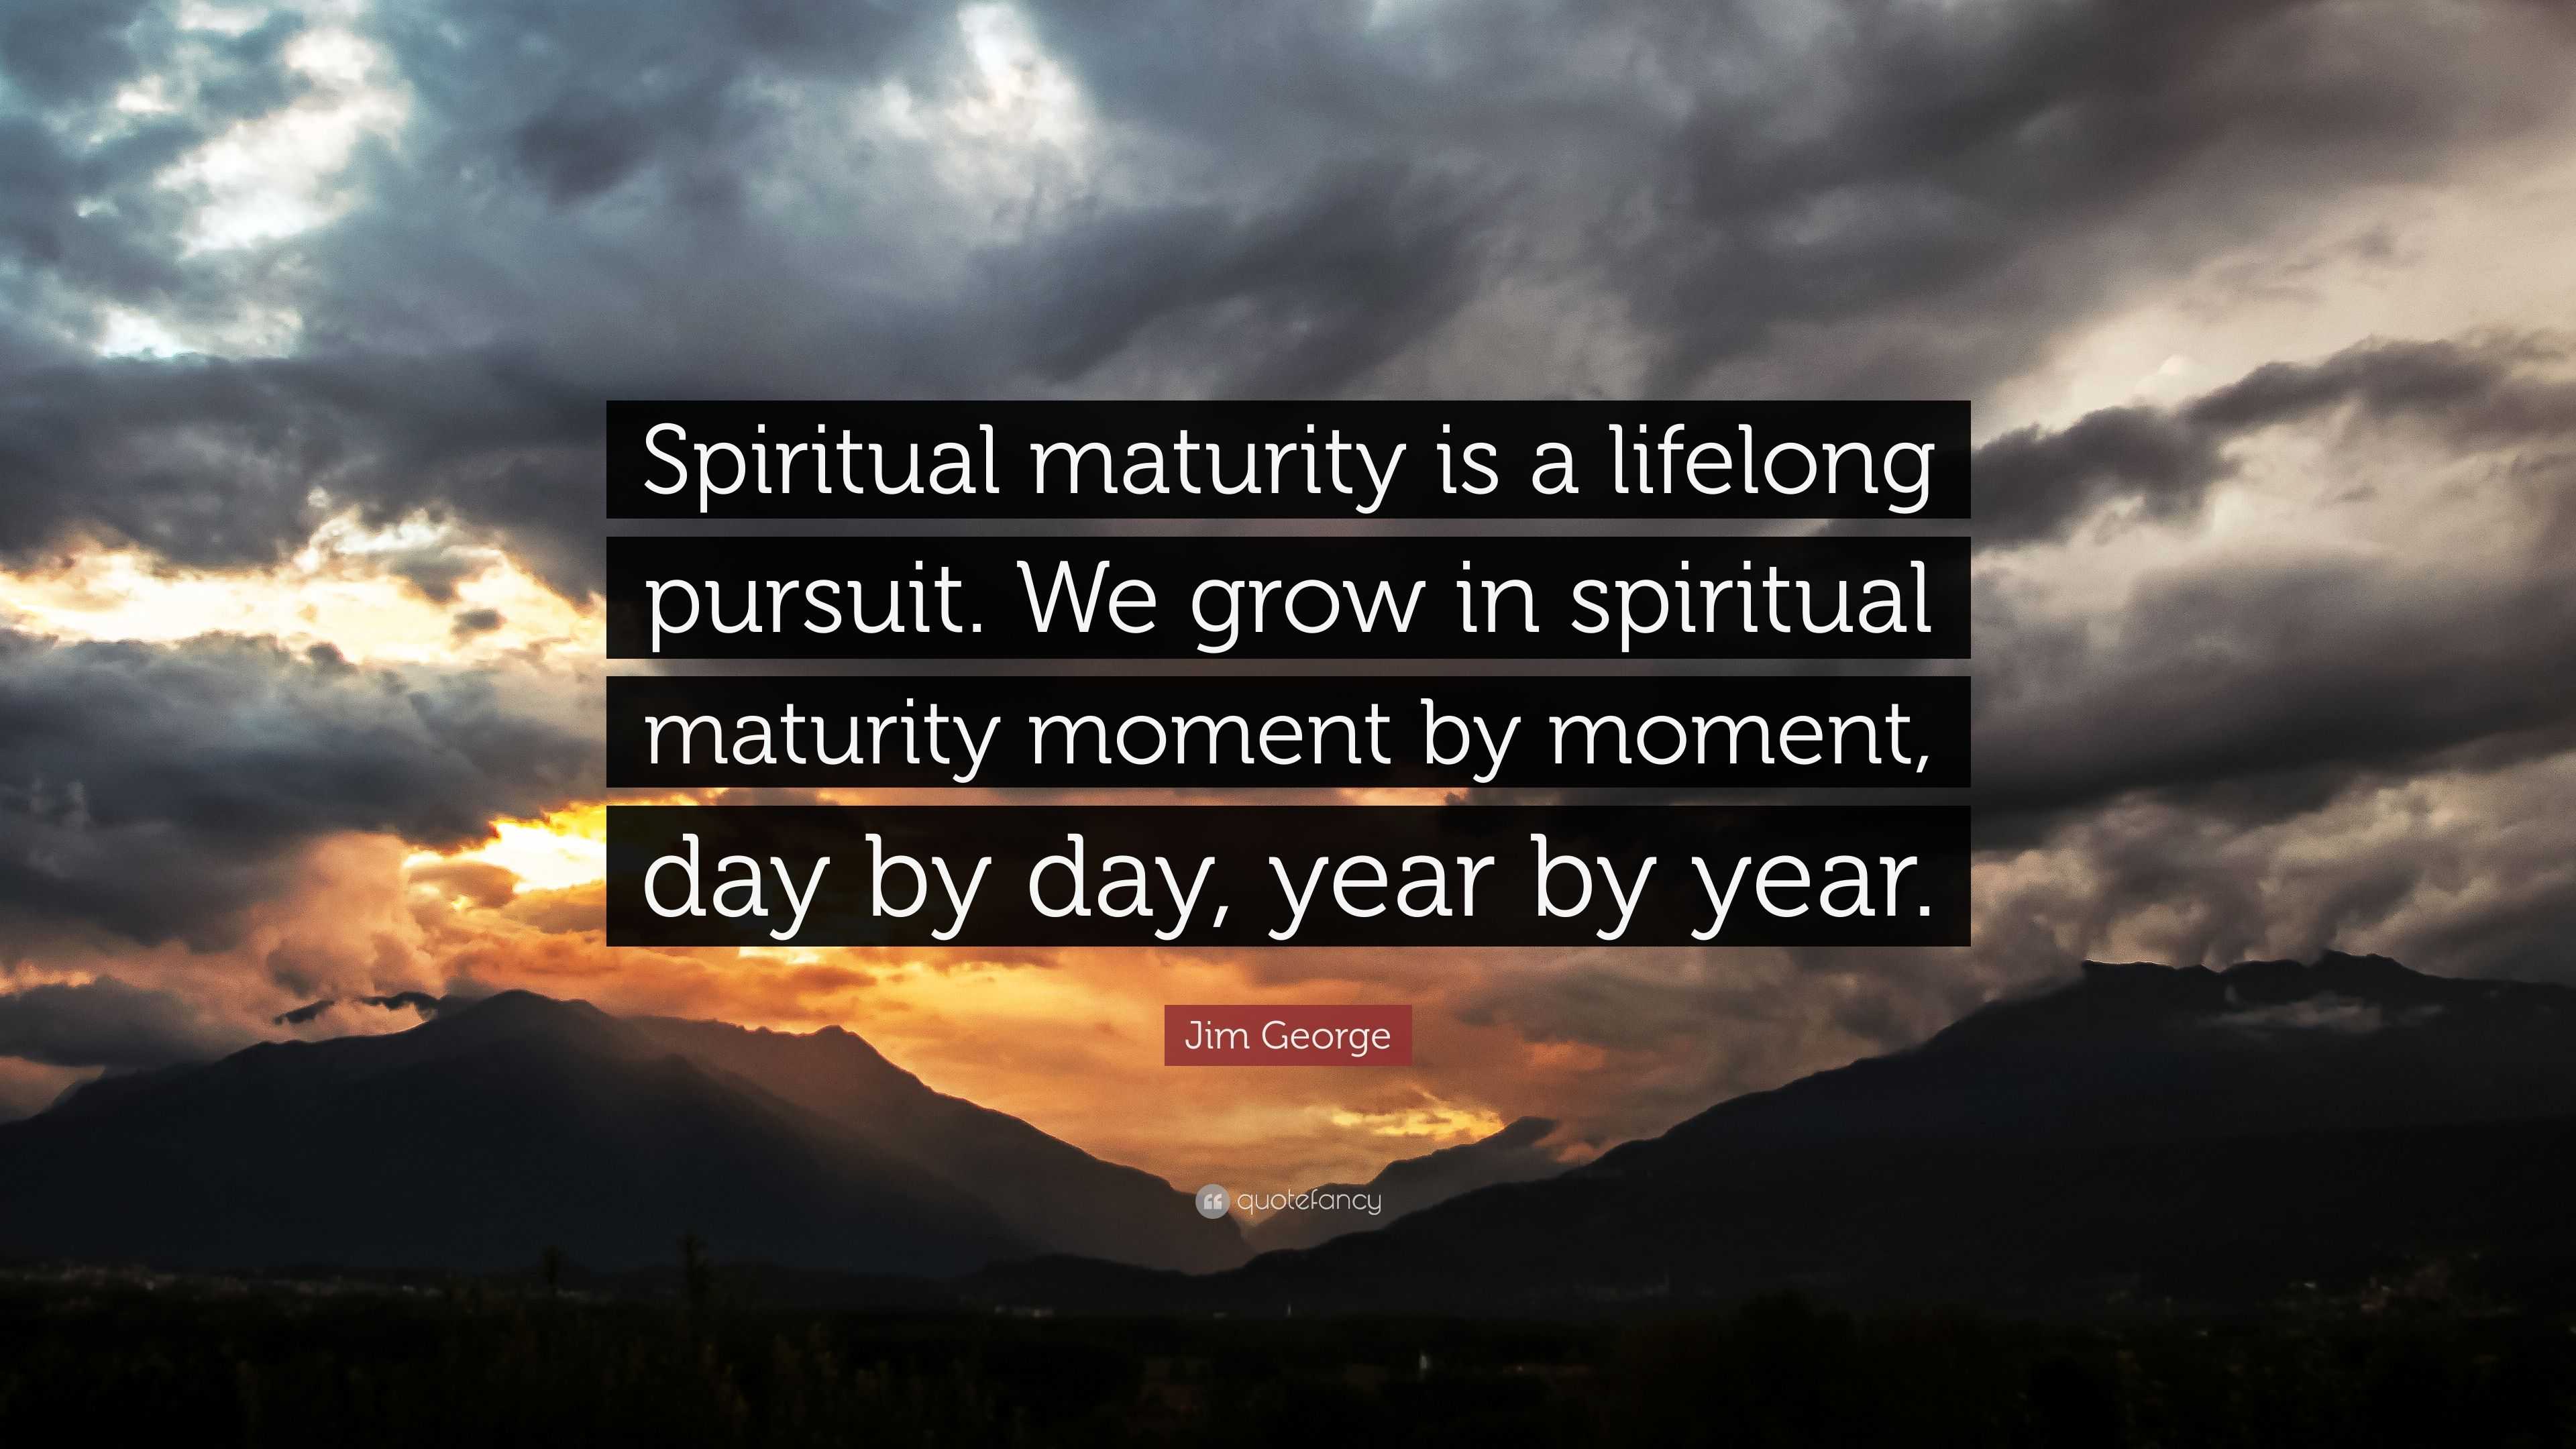 Jim Quote “Spiritual maturity is a lifelong